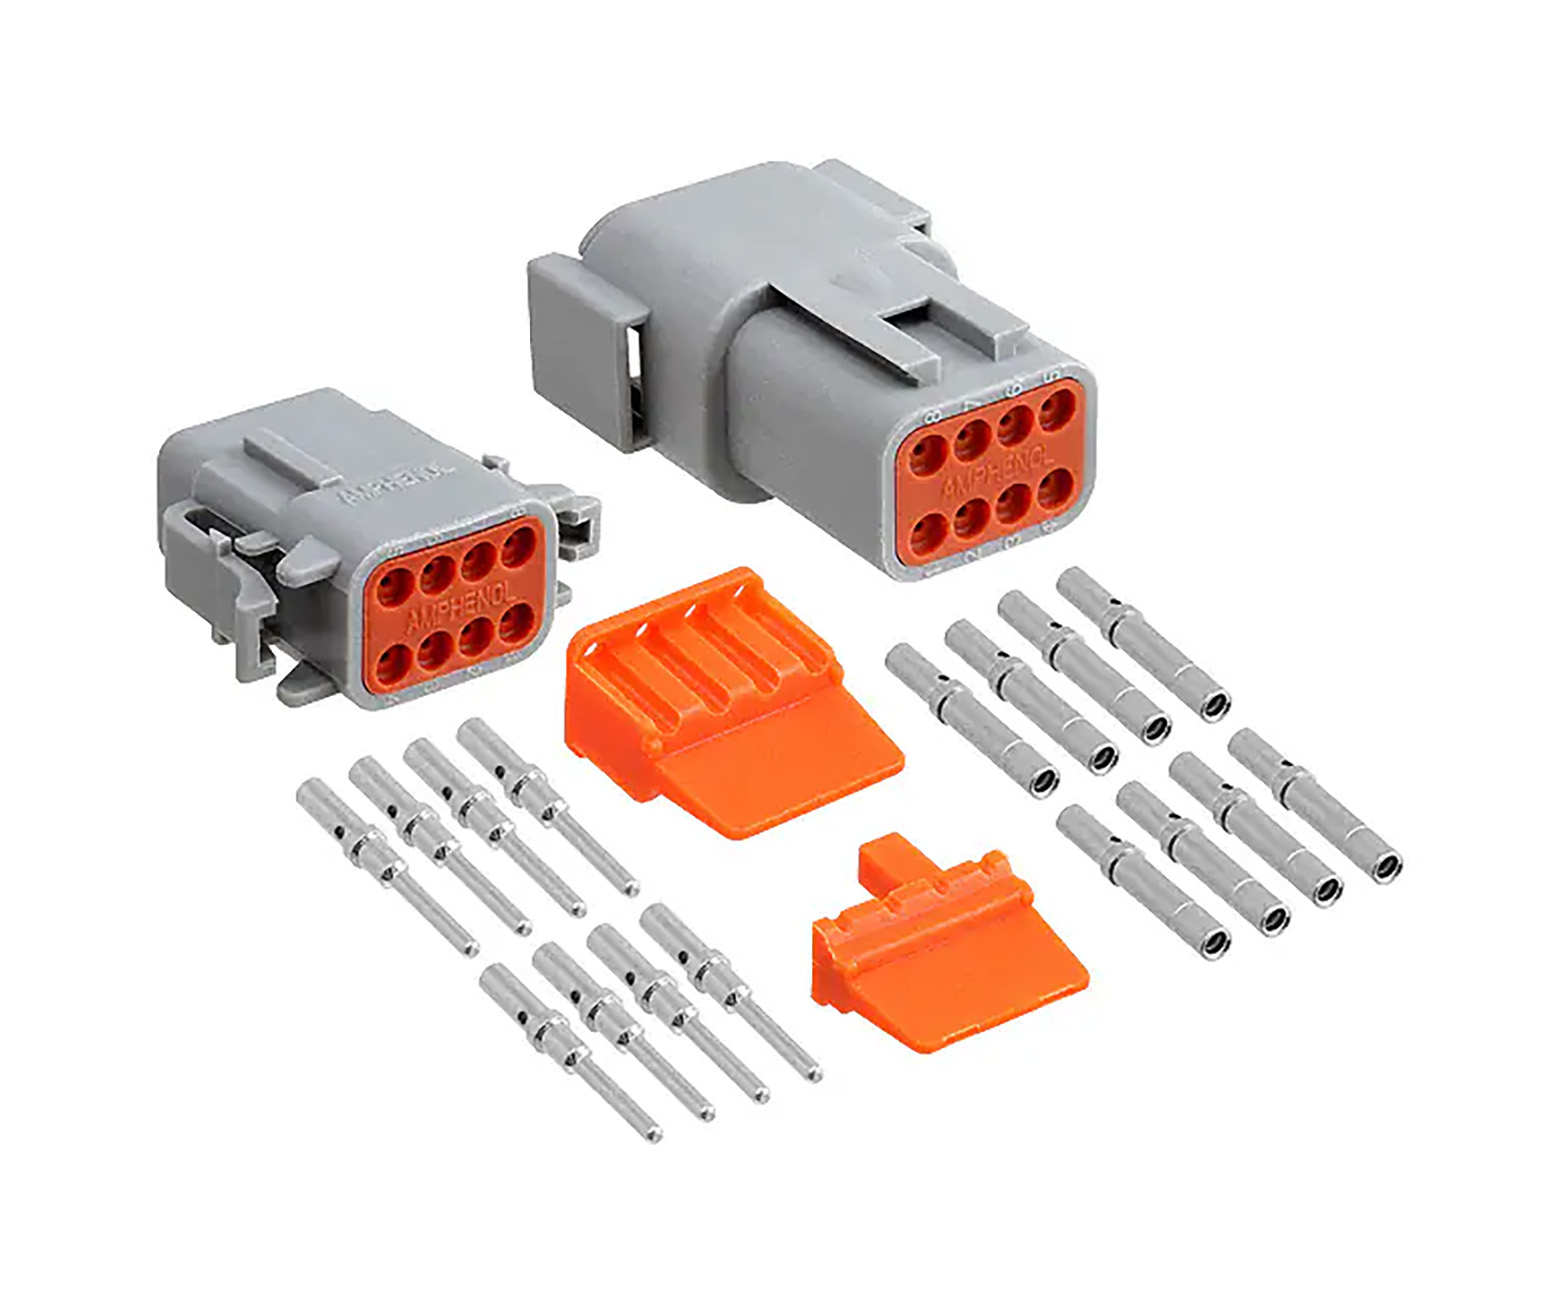 Low Voltage Connector Kits